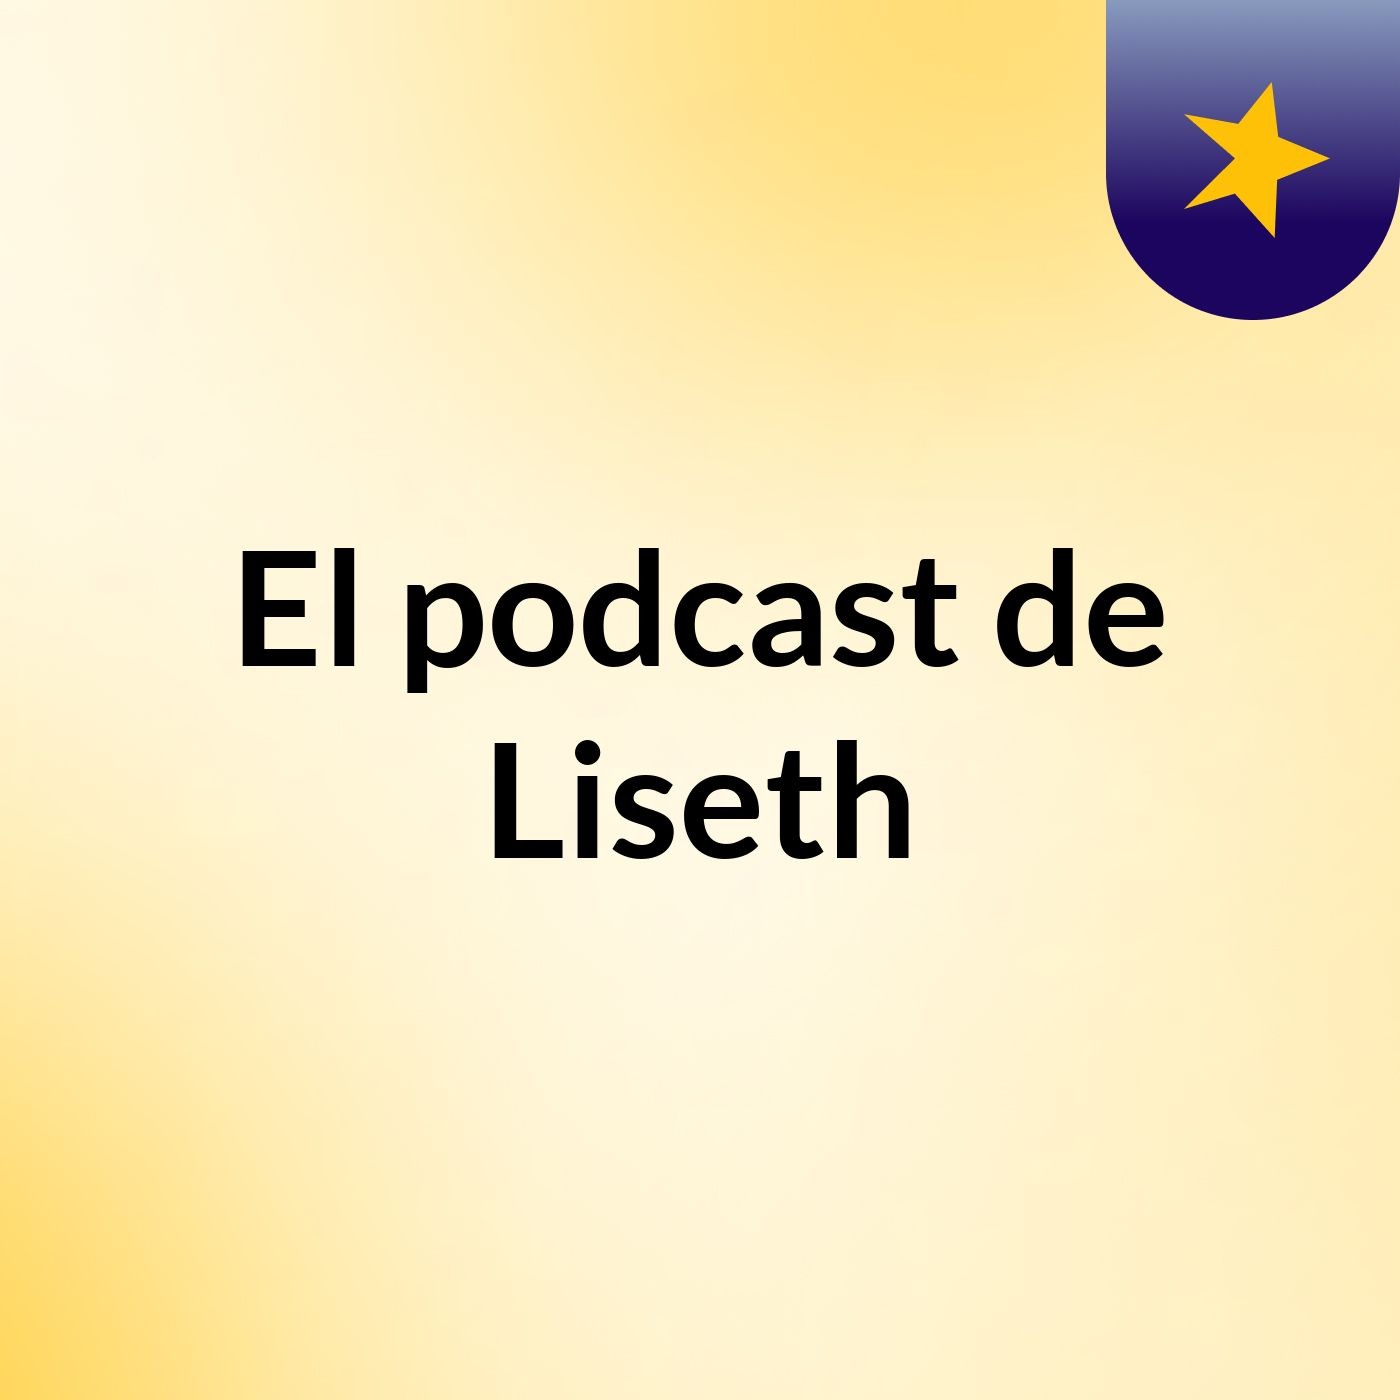 El podcast de Liseth